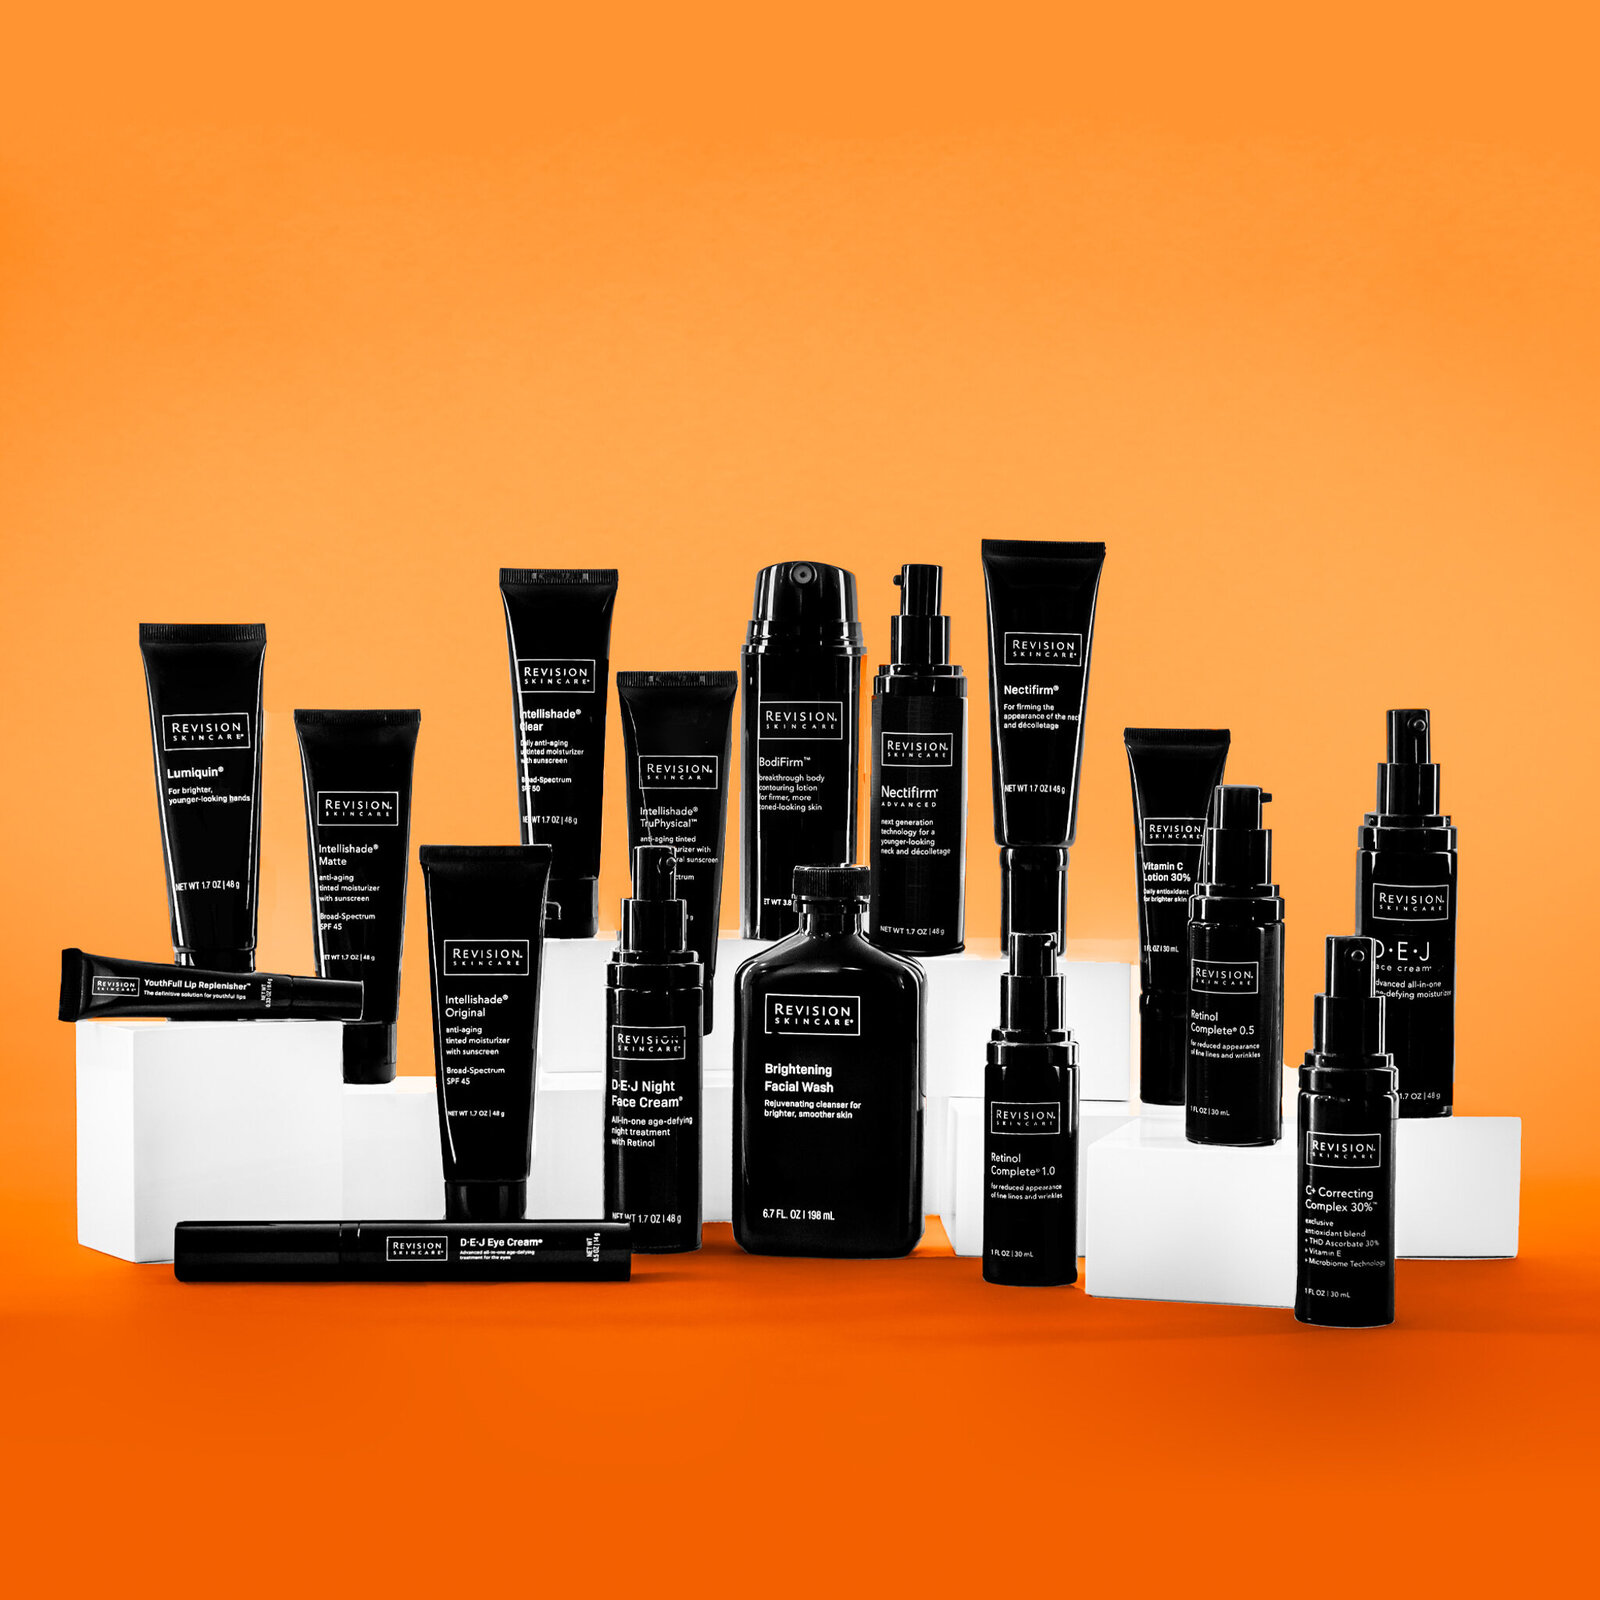 Full product line for Revision Skincare on orange background